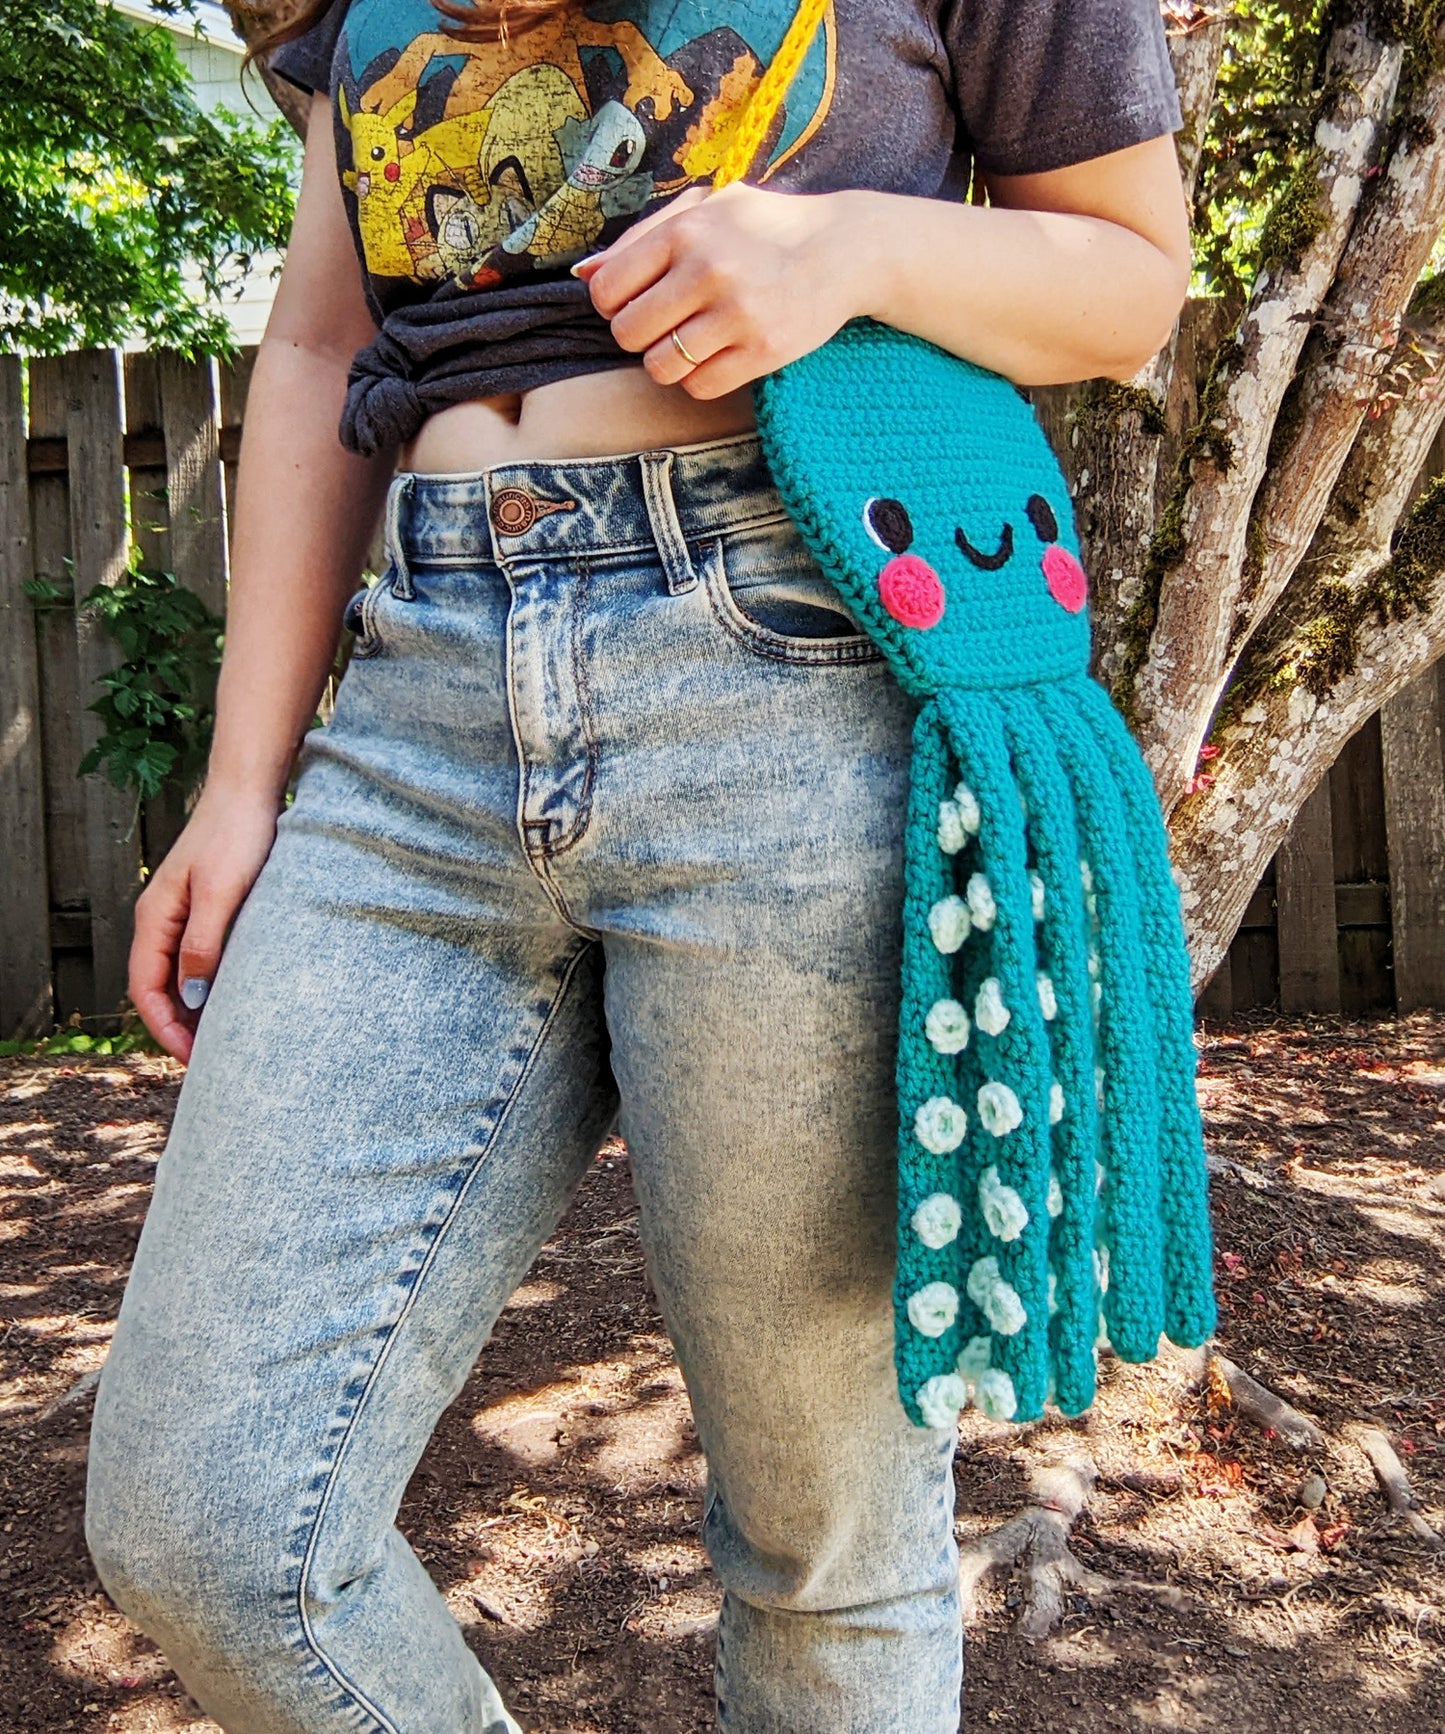 Octopus Crossbody Bag - Hand crocheted purse - Sample Sale